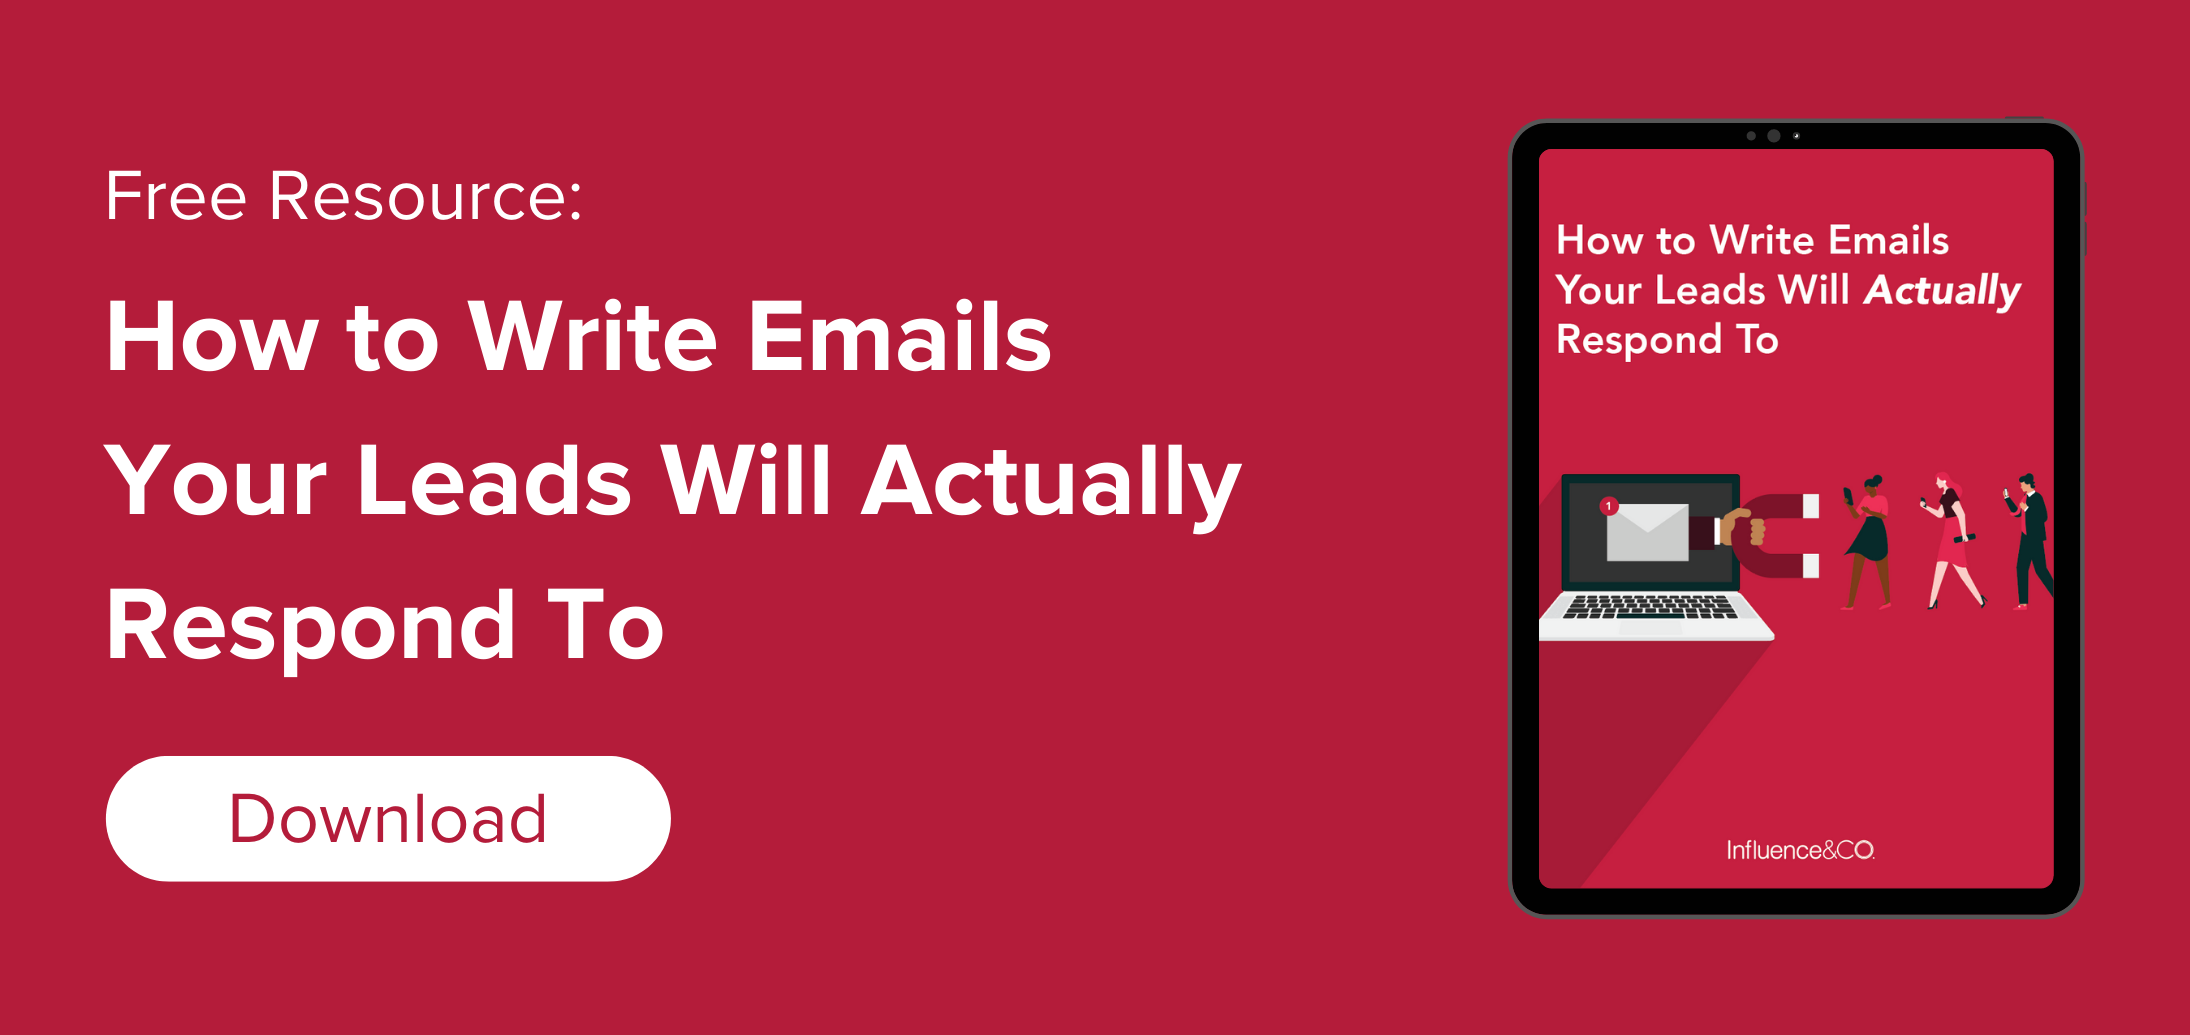 write-emails-leads-respond-to-cta